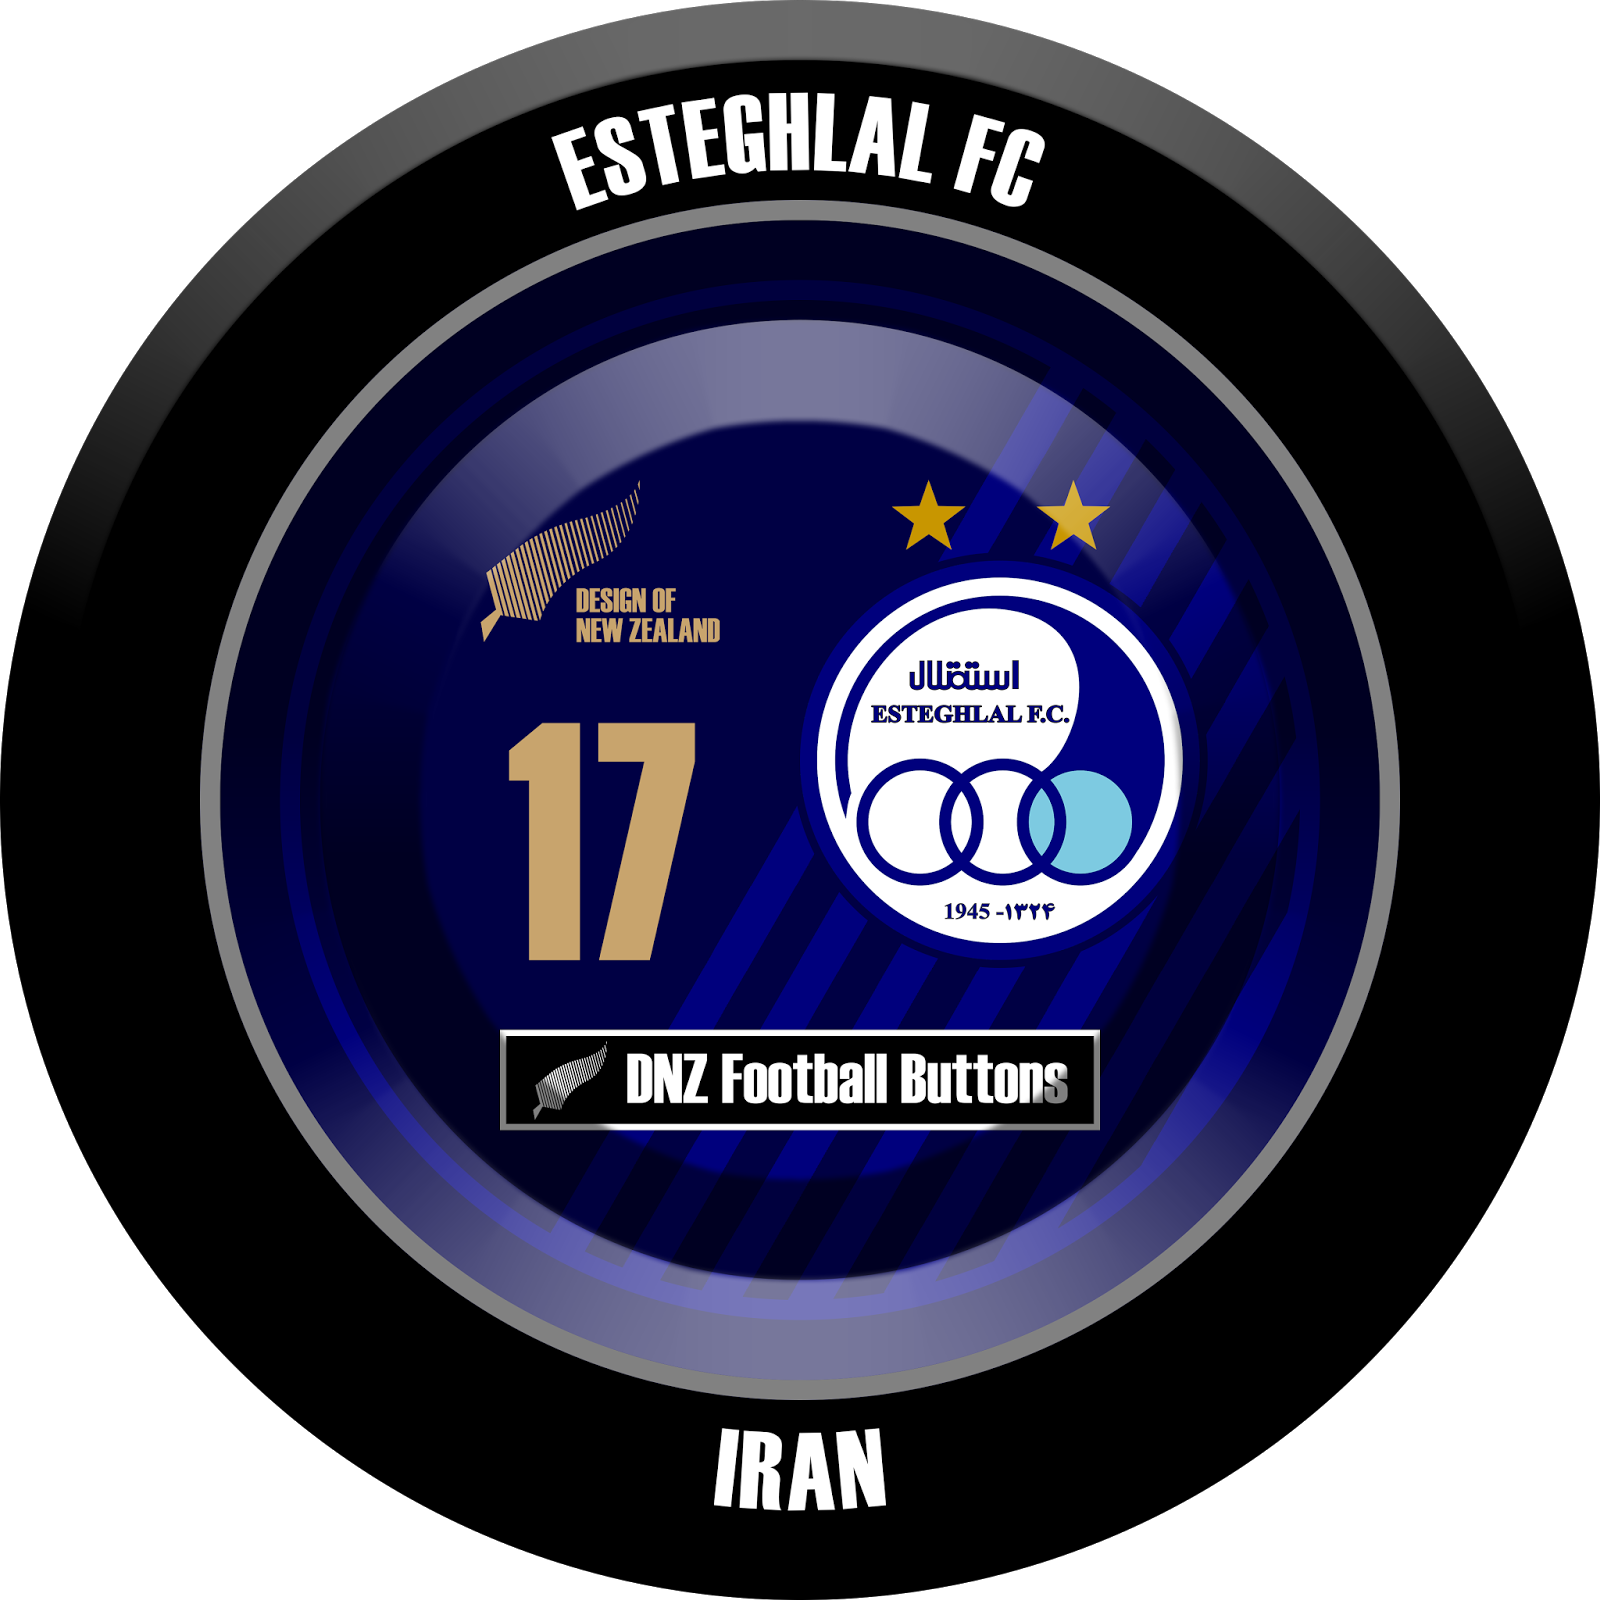 DNZ Football Buttons: Esteghlal FC